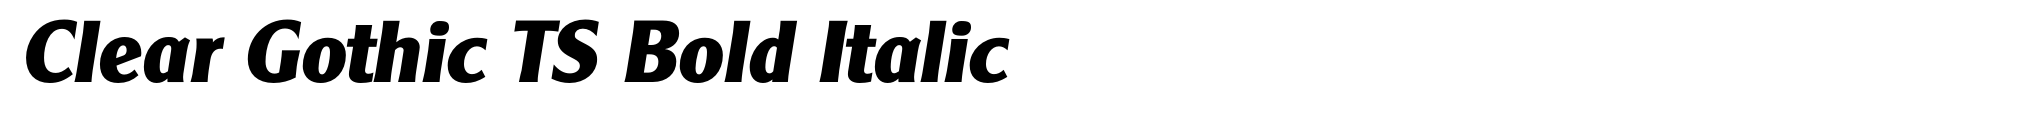 Clear Gothic TS Bold Italic image